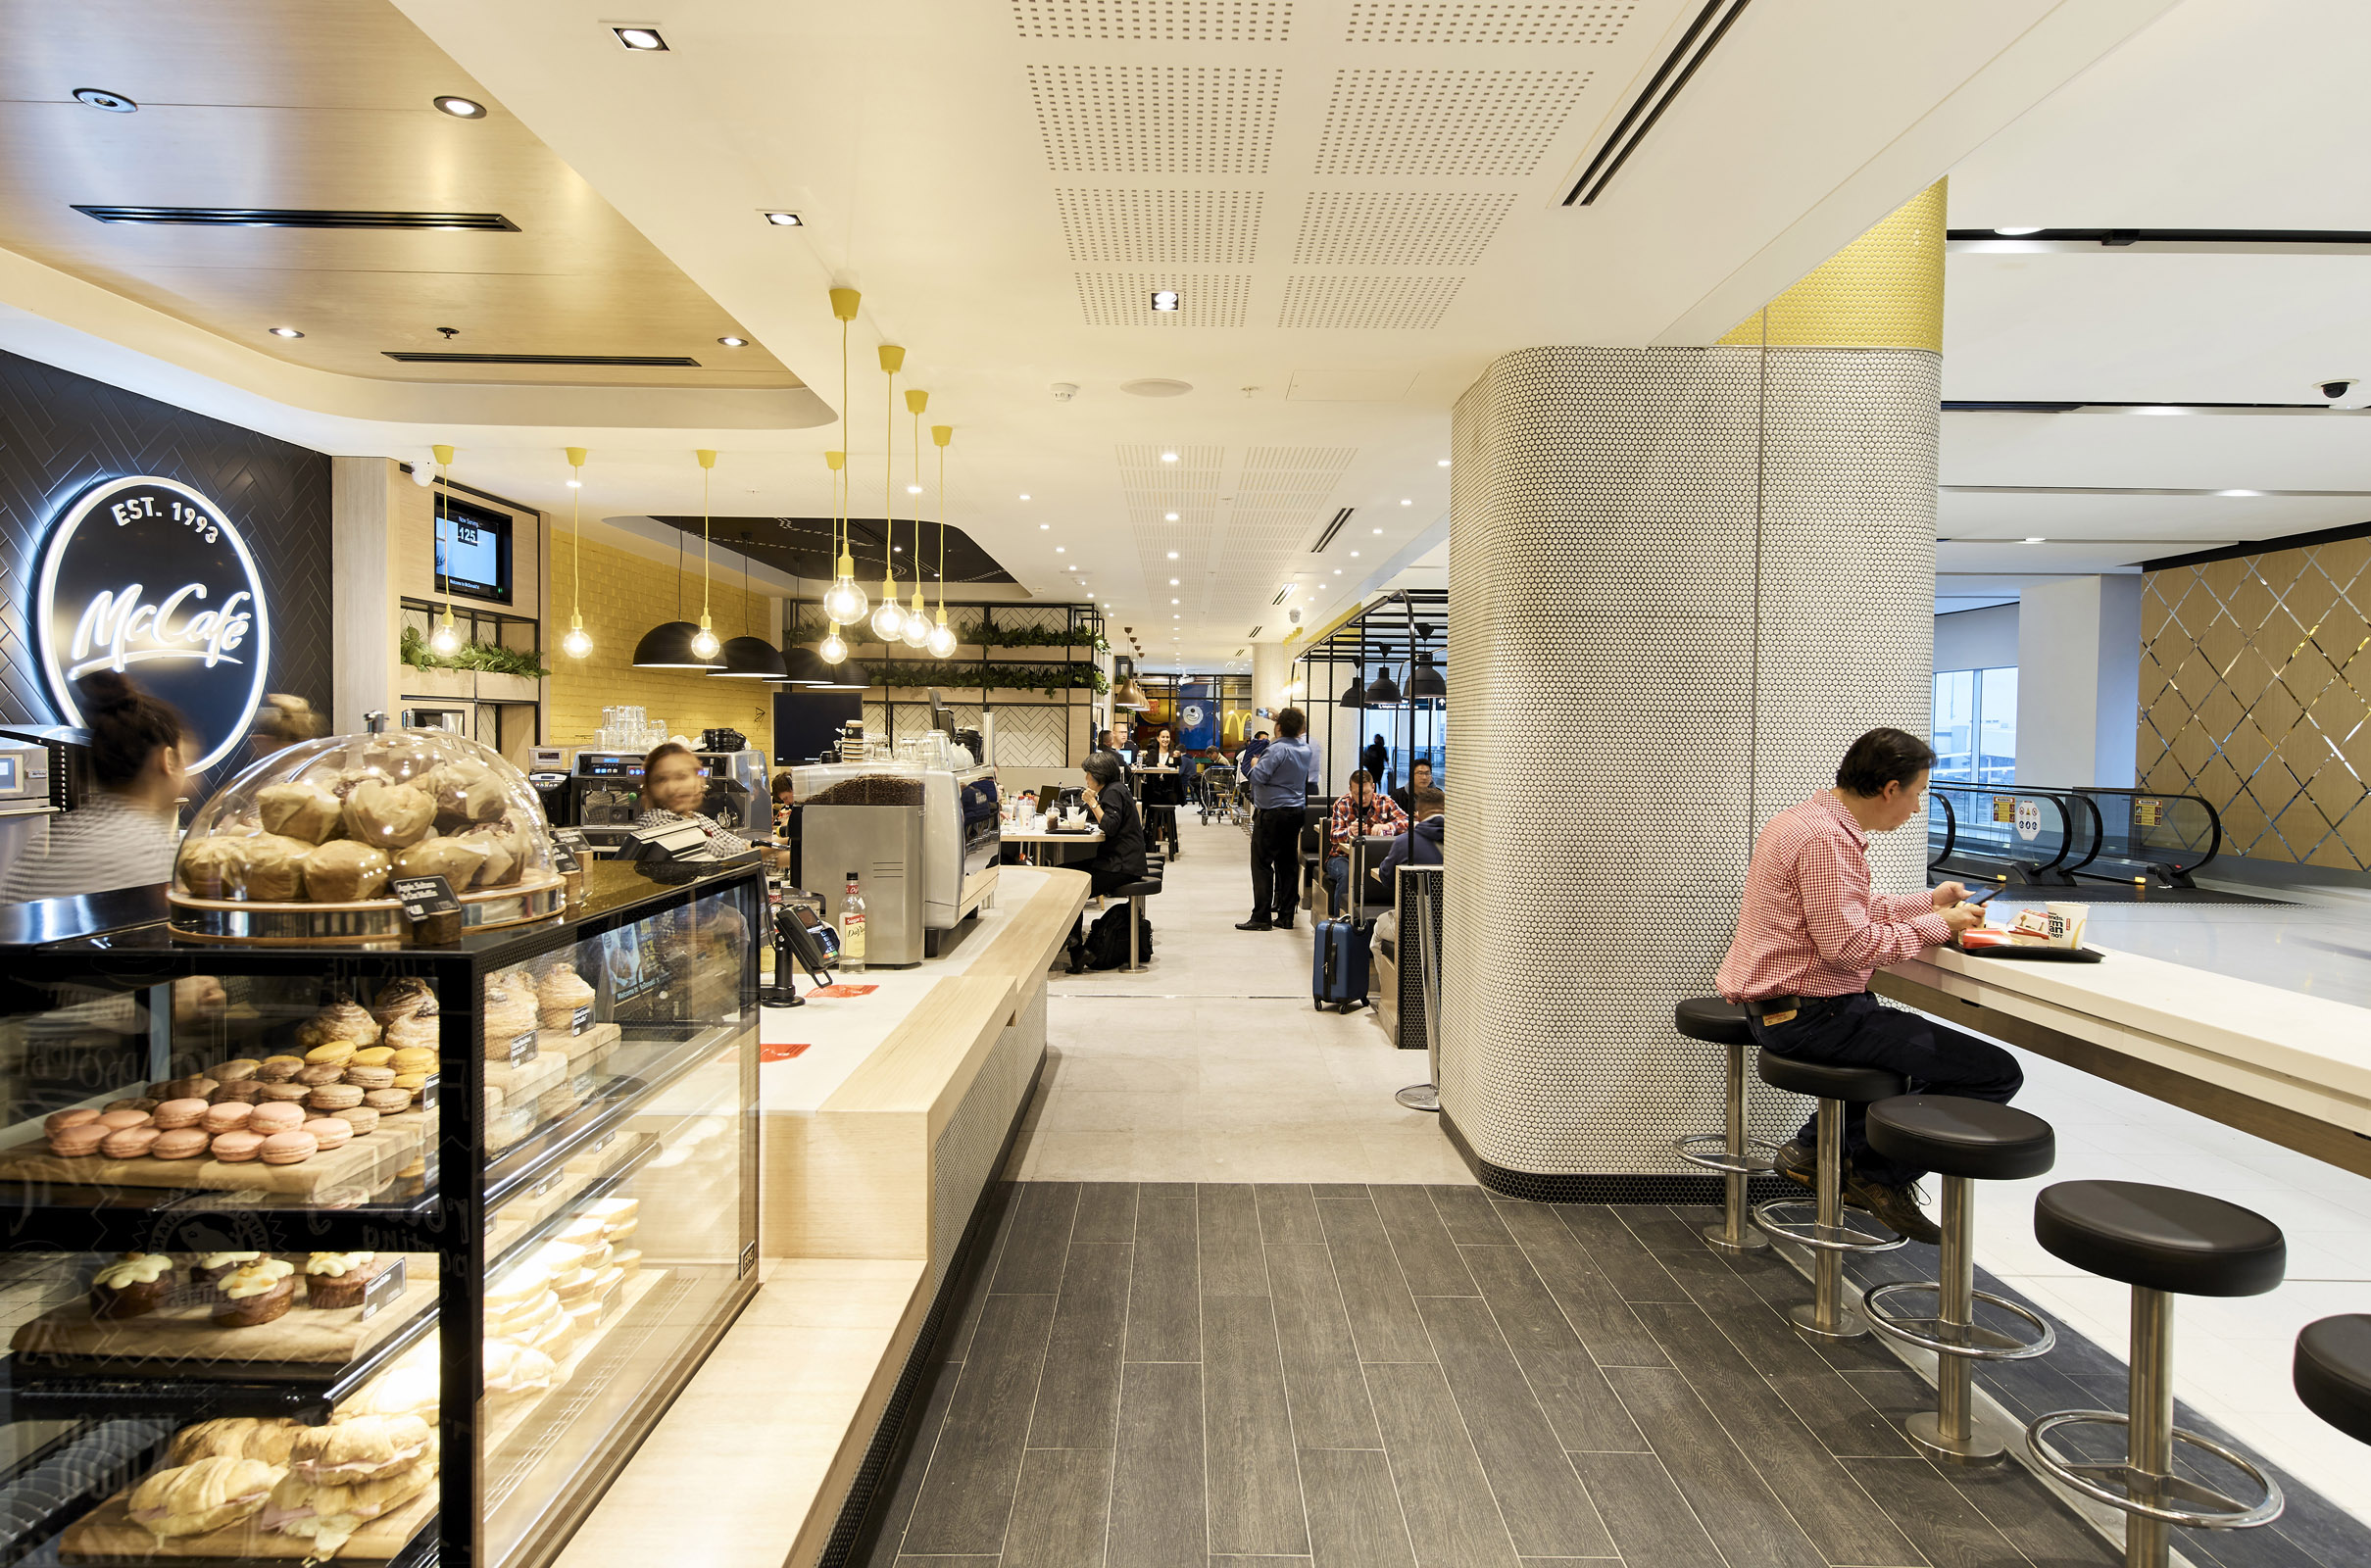 sydney-airport-t1-international-terminal-mcdonalds-new-look-interior